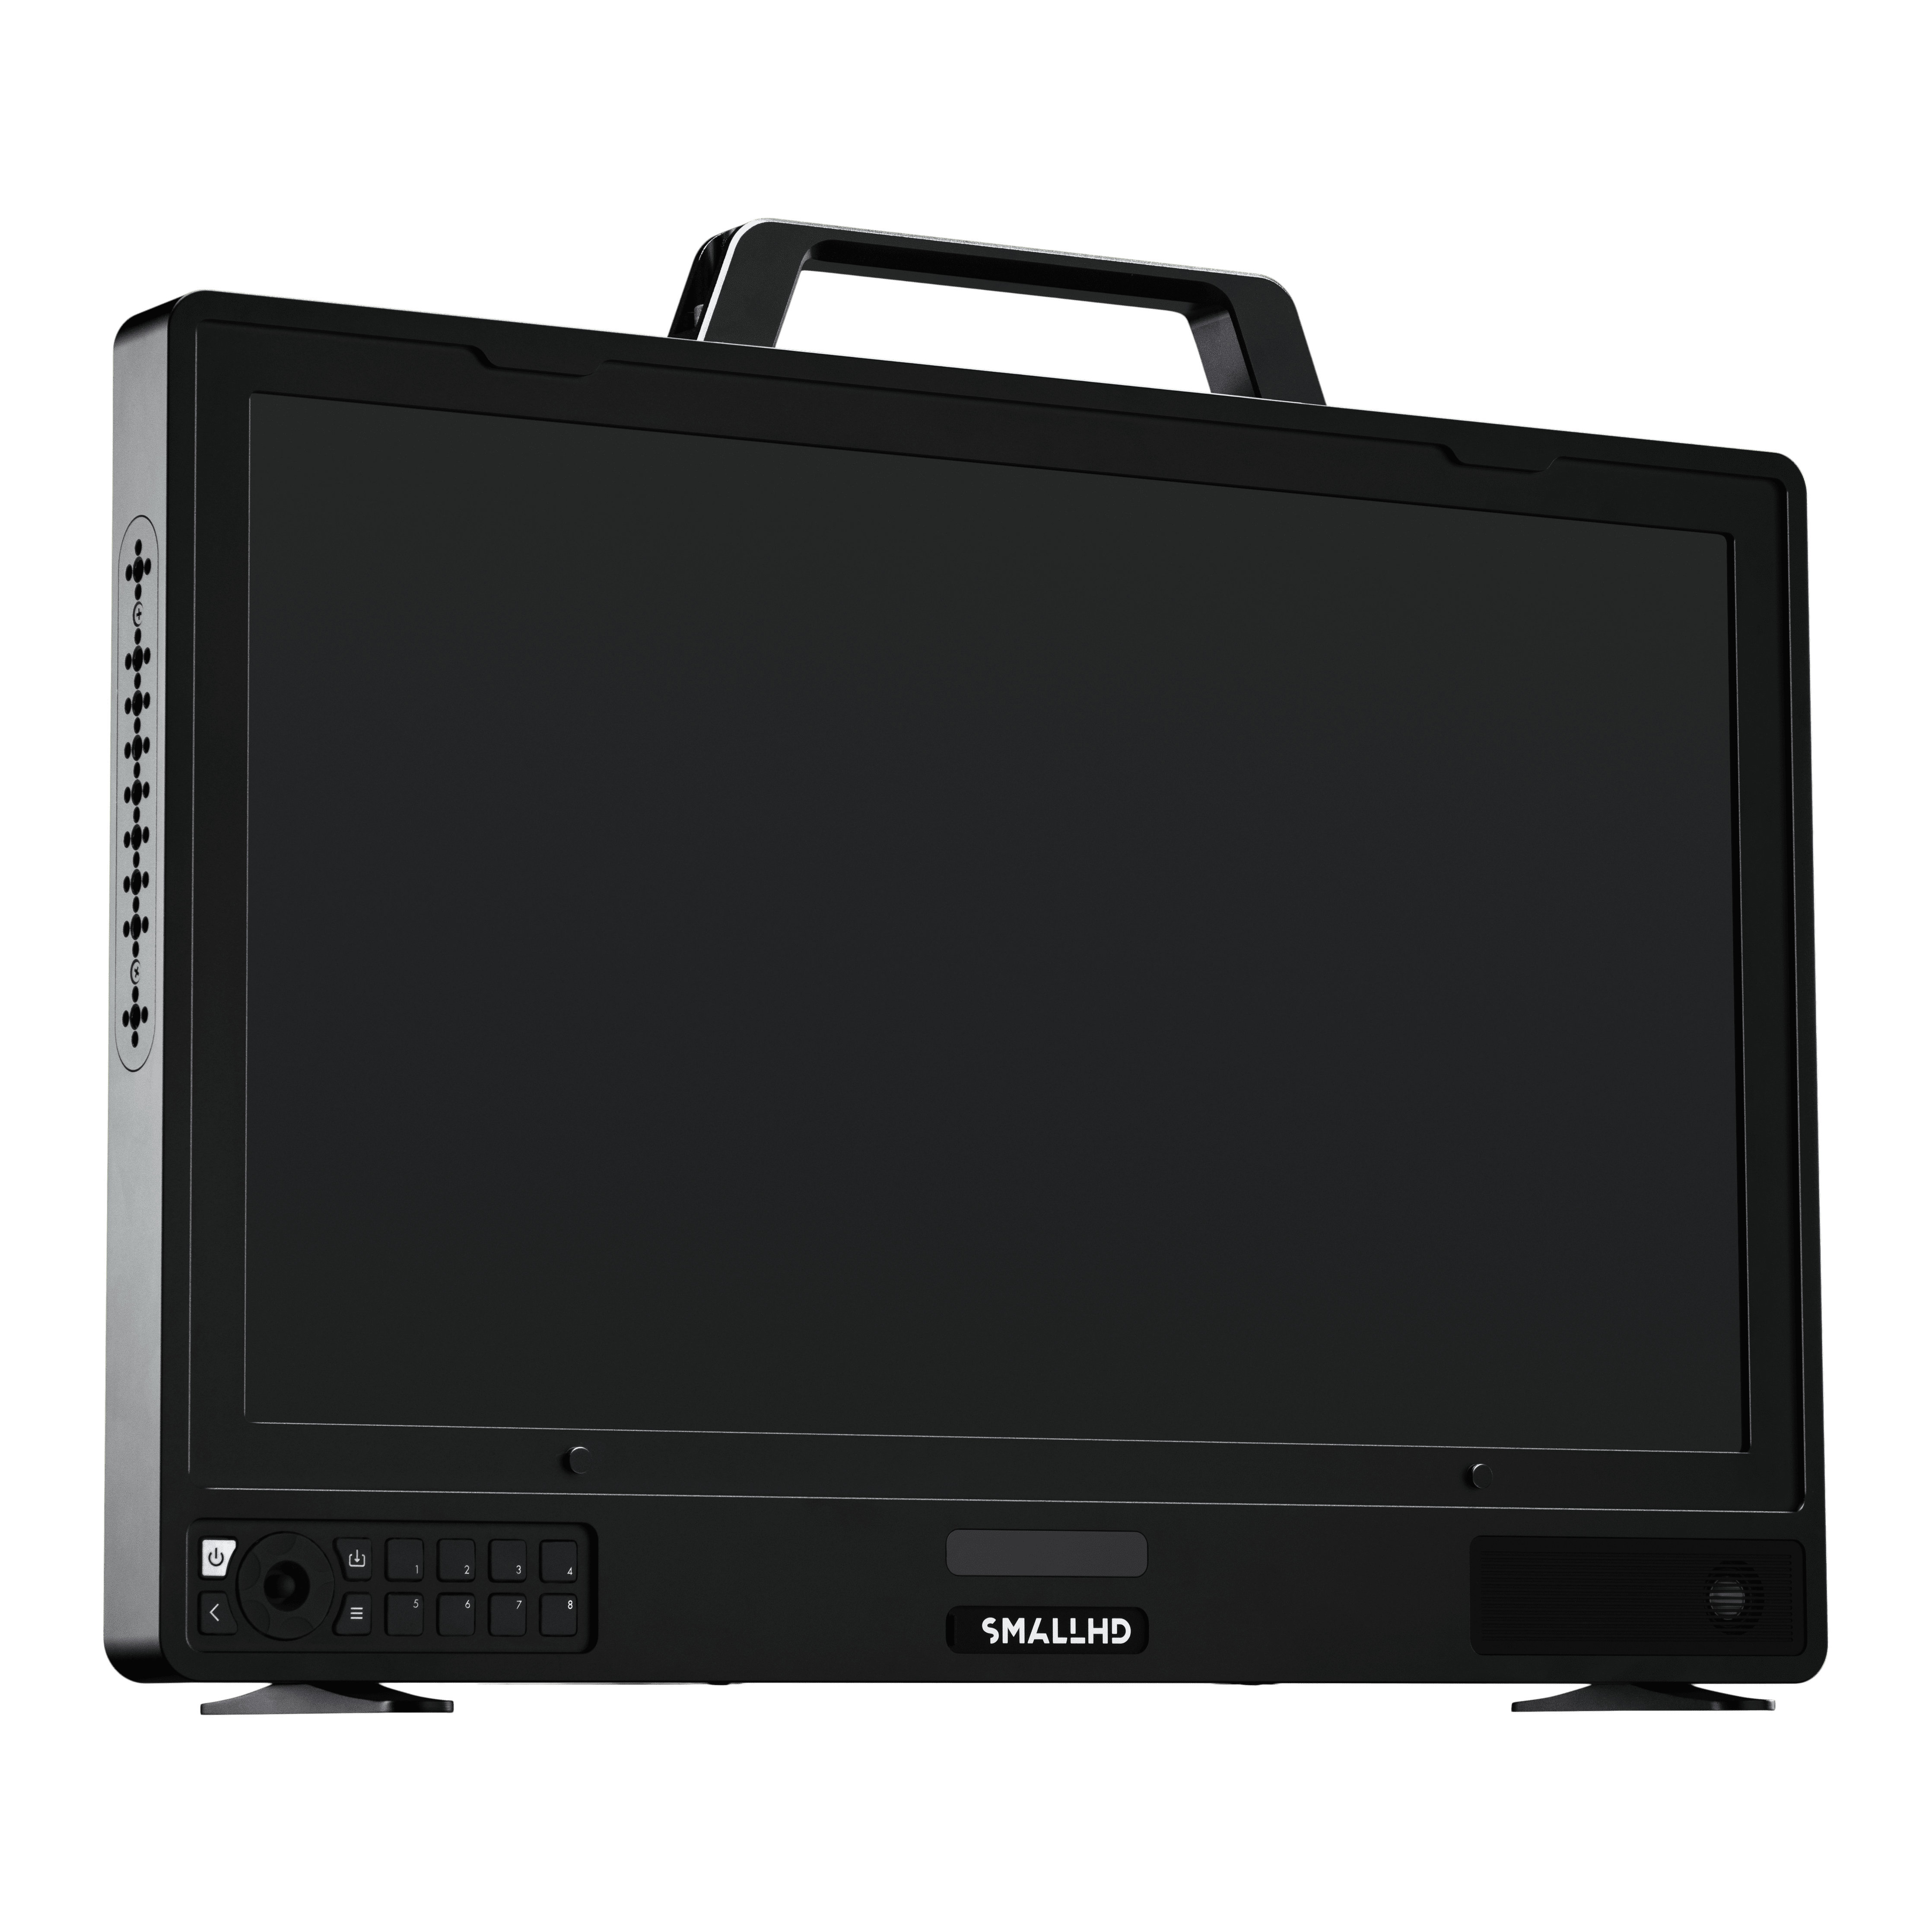 SmallHD OLED 22” 4K/UHD, Reference Monitor, SDI/HDMI, 350Nits, true 10bit